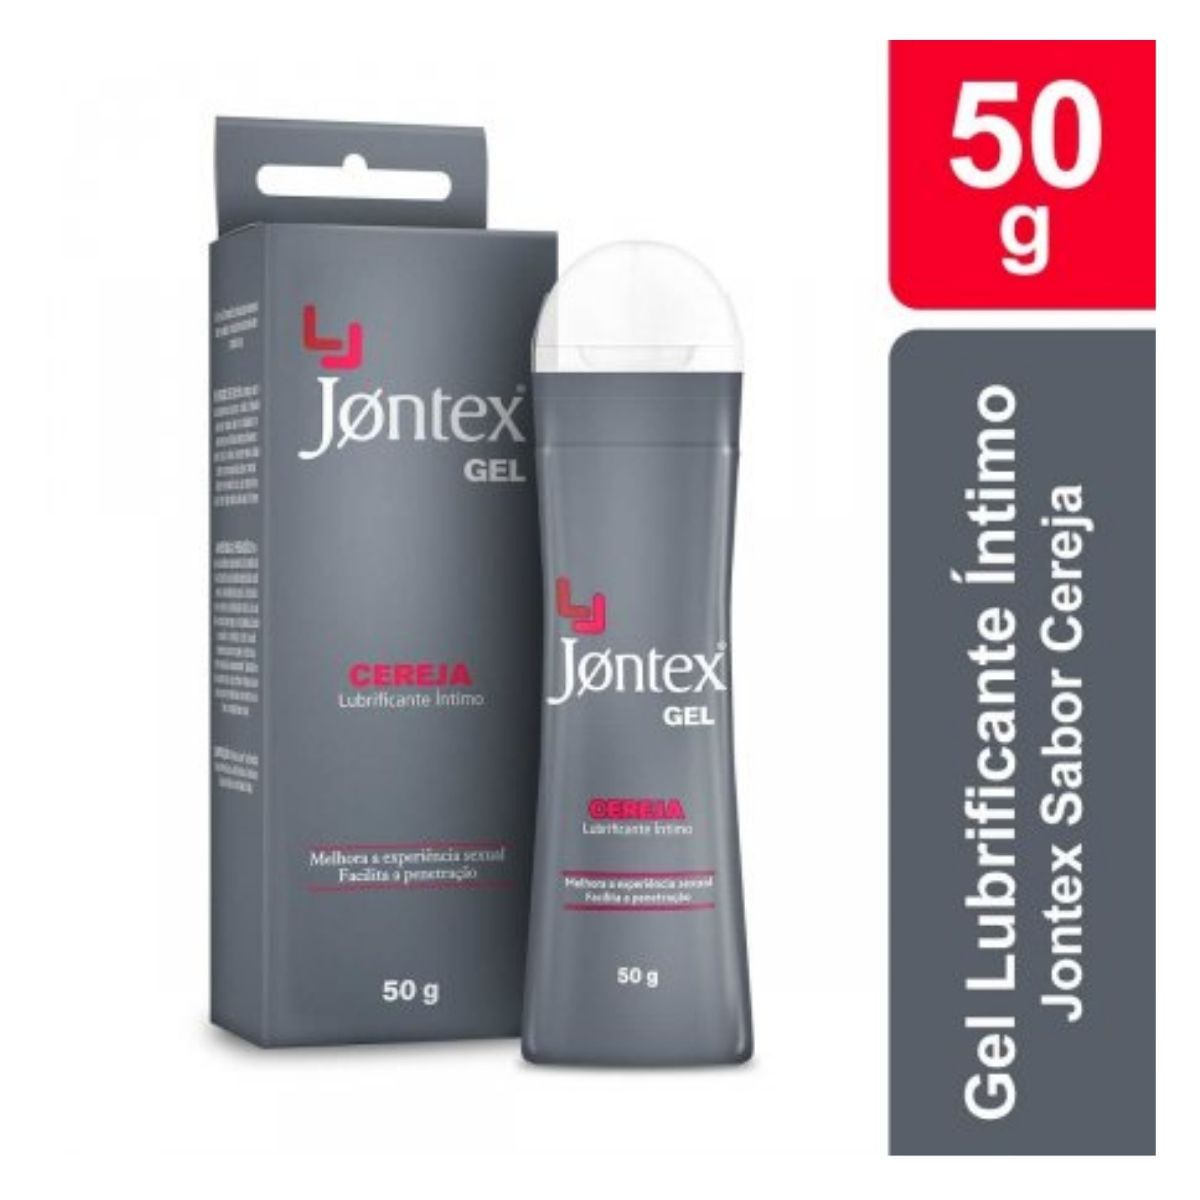 jontex-gel-lubrificante-cereja-3em1-50g-1.jpg